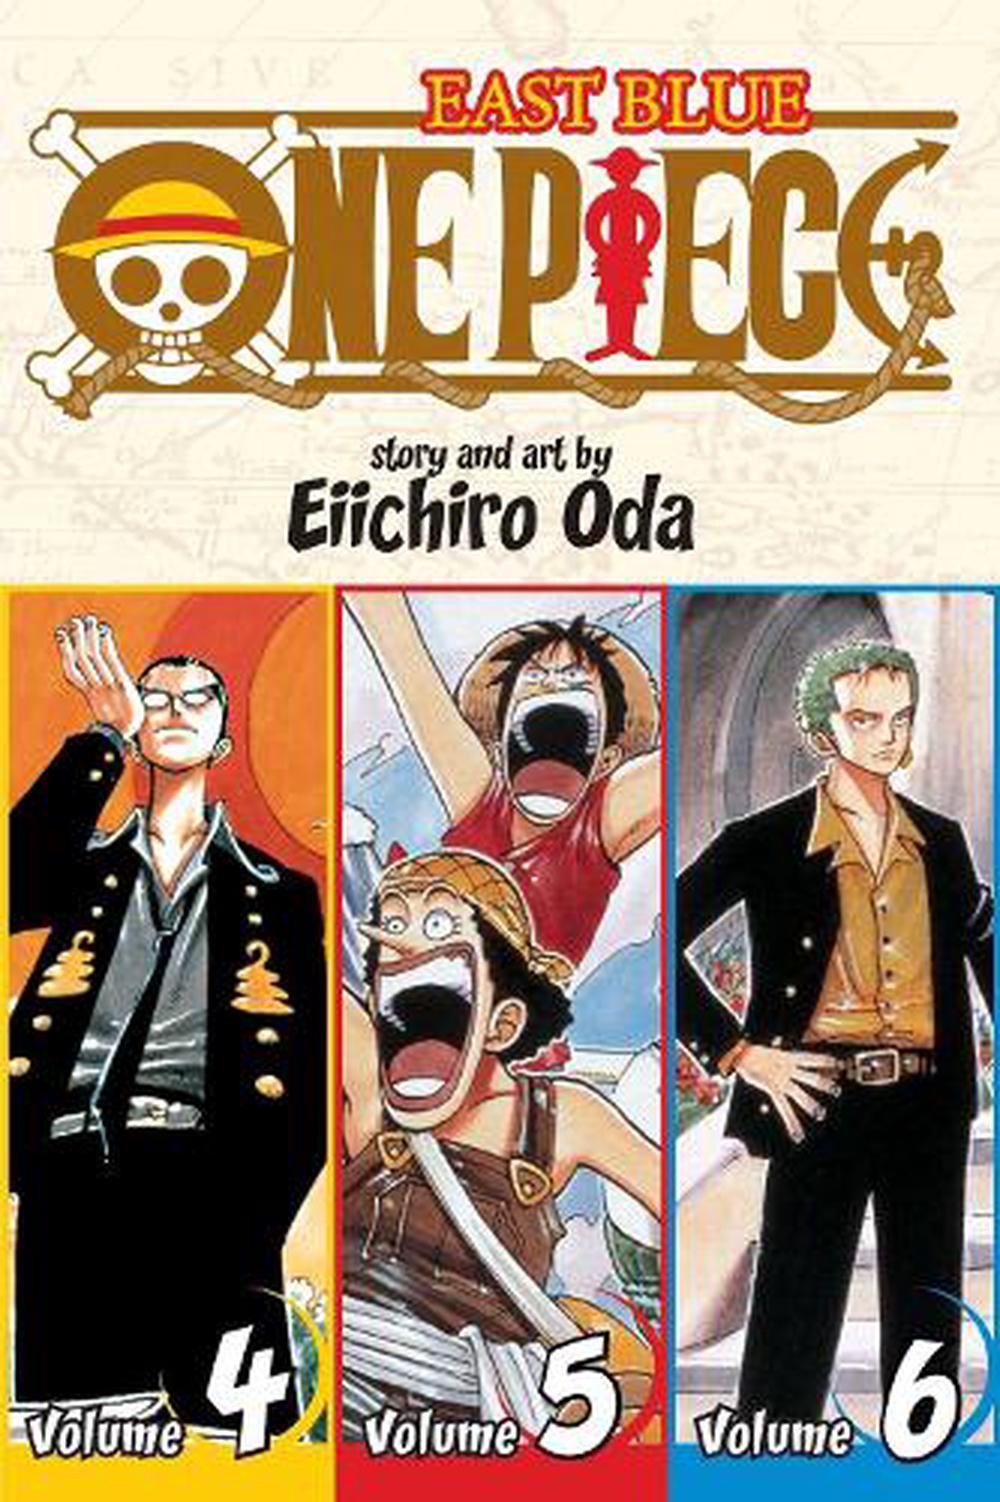 Pirate Fashion: 'One Piece' creator Eiichiro Oda sketches lookbook